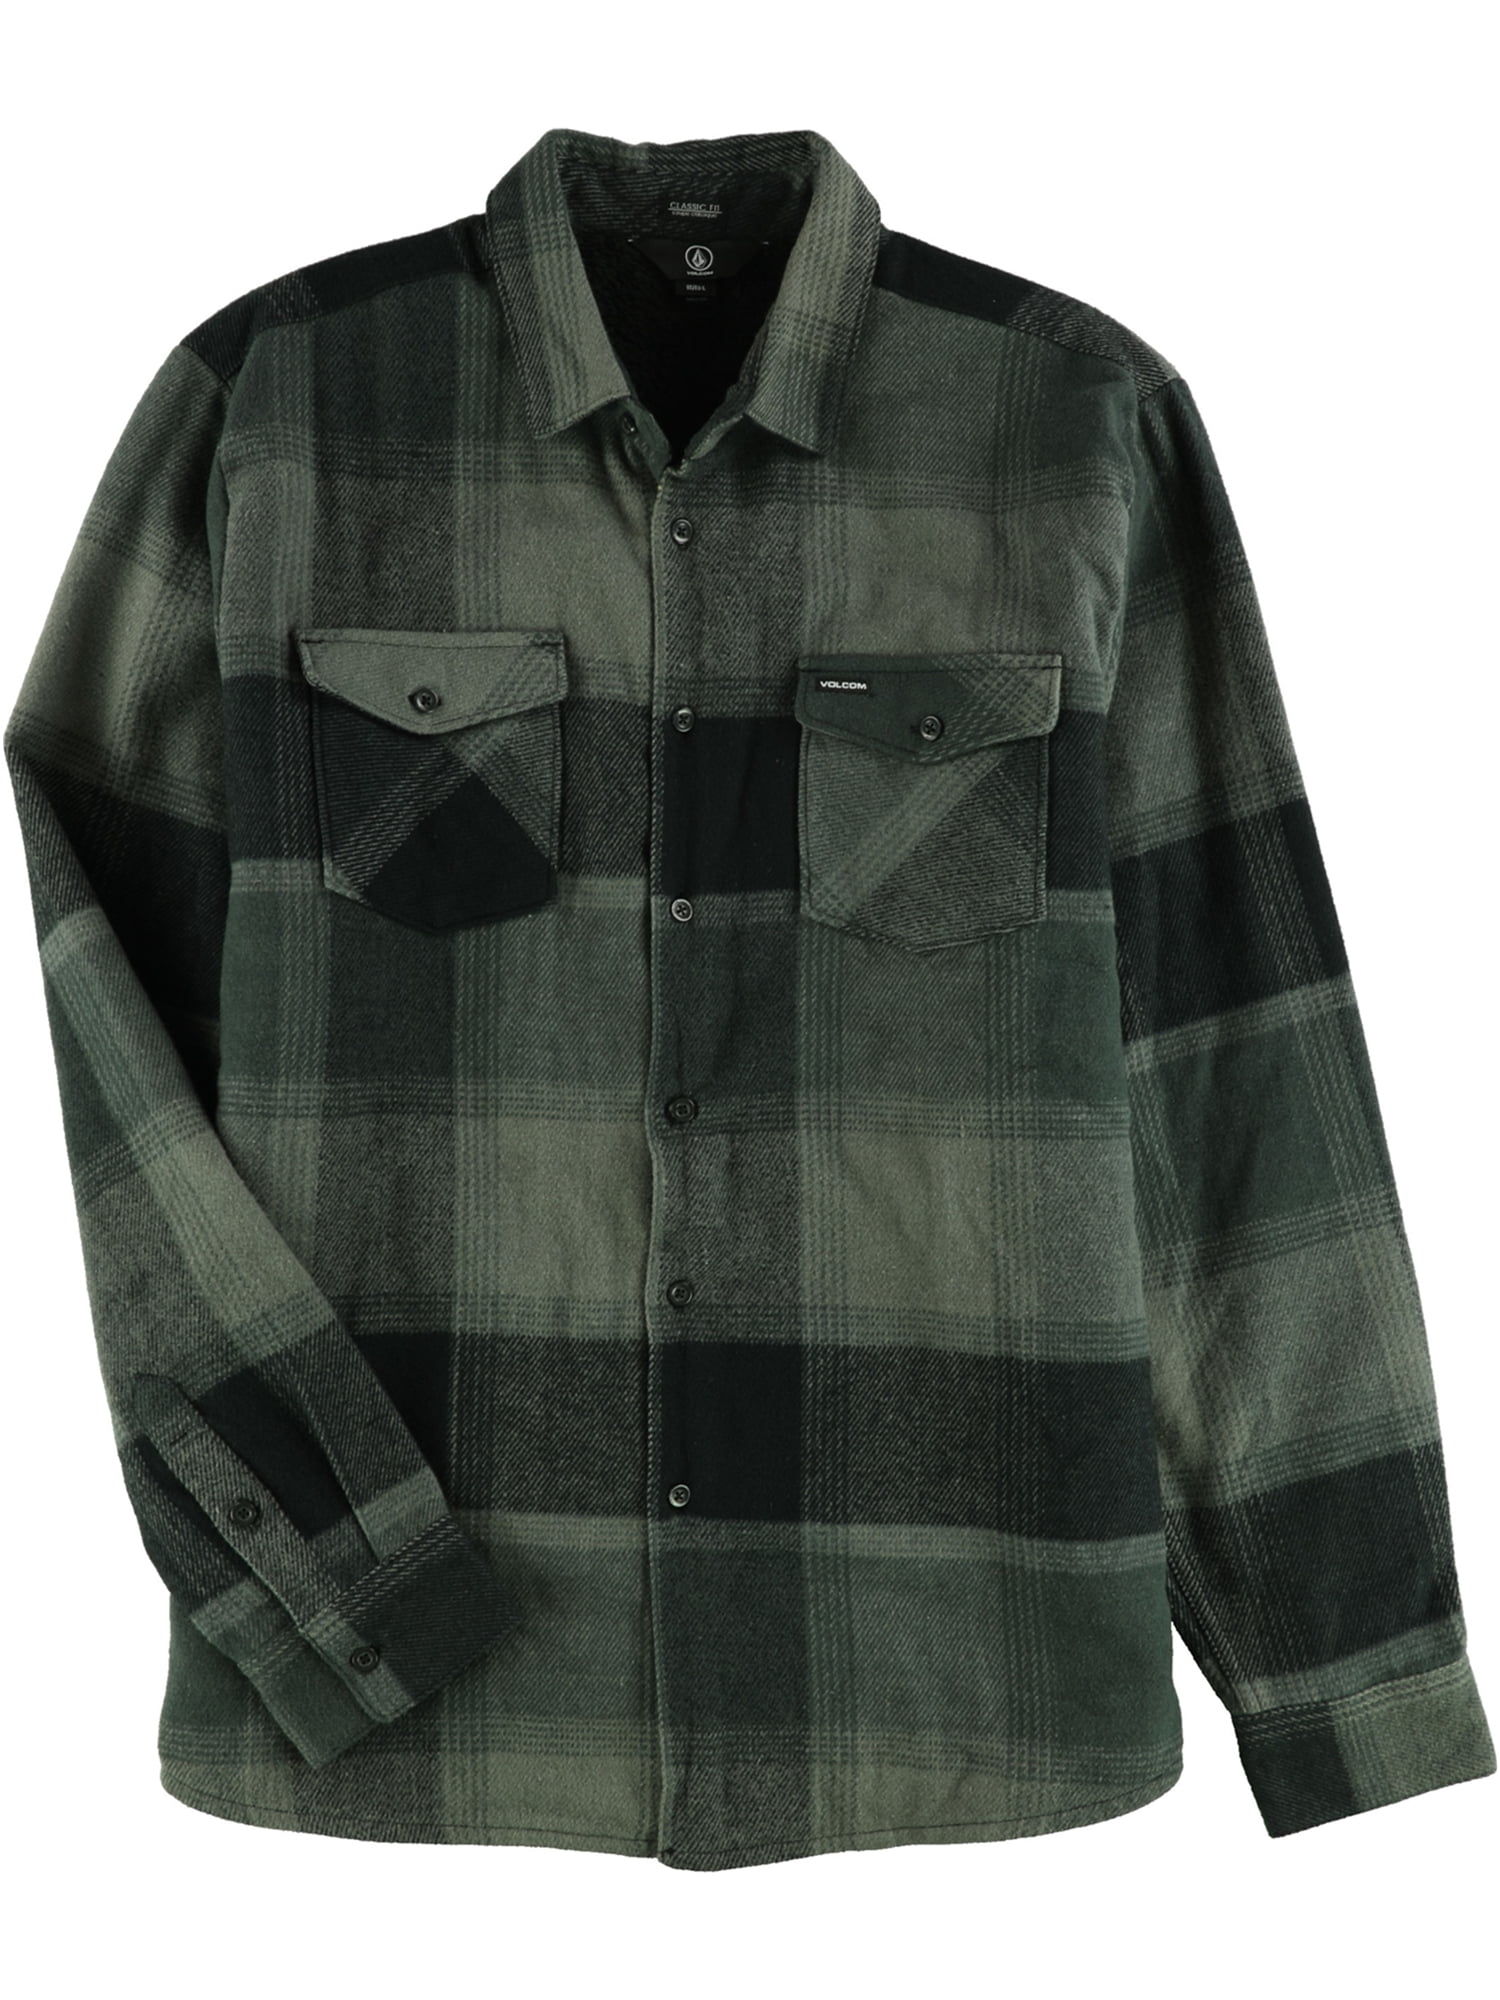 Volcom Mens Flannel Button Up Shirt blk S | Walmart Canada